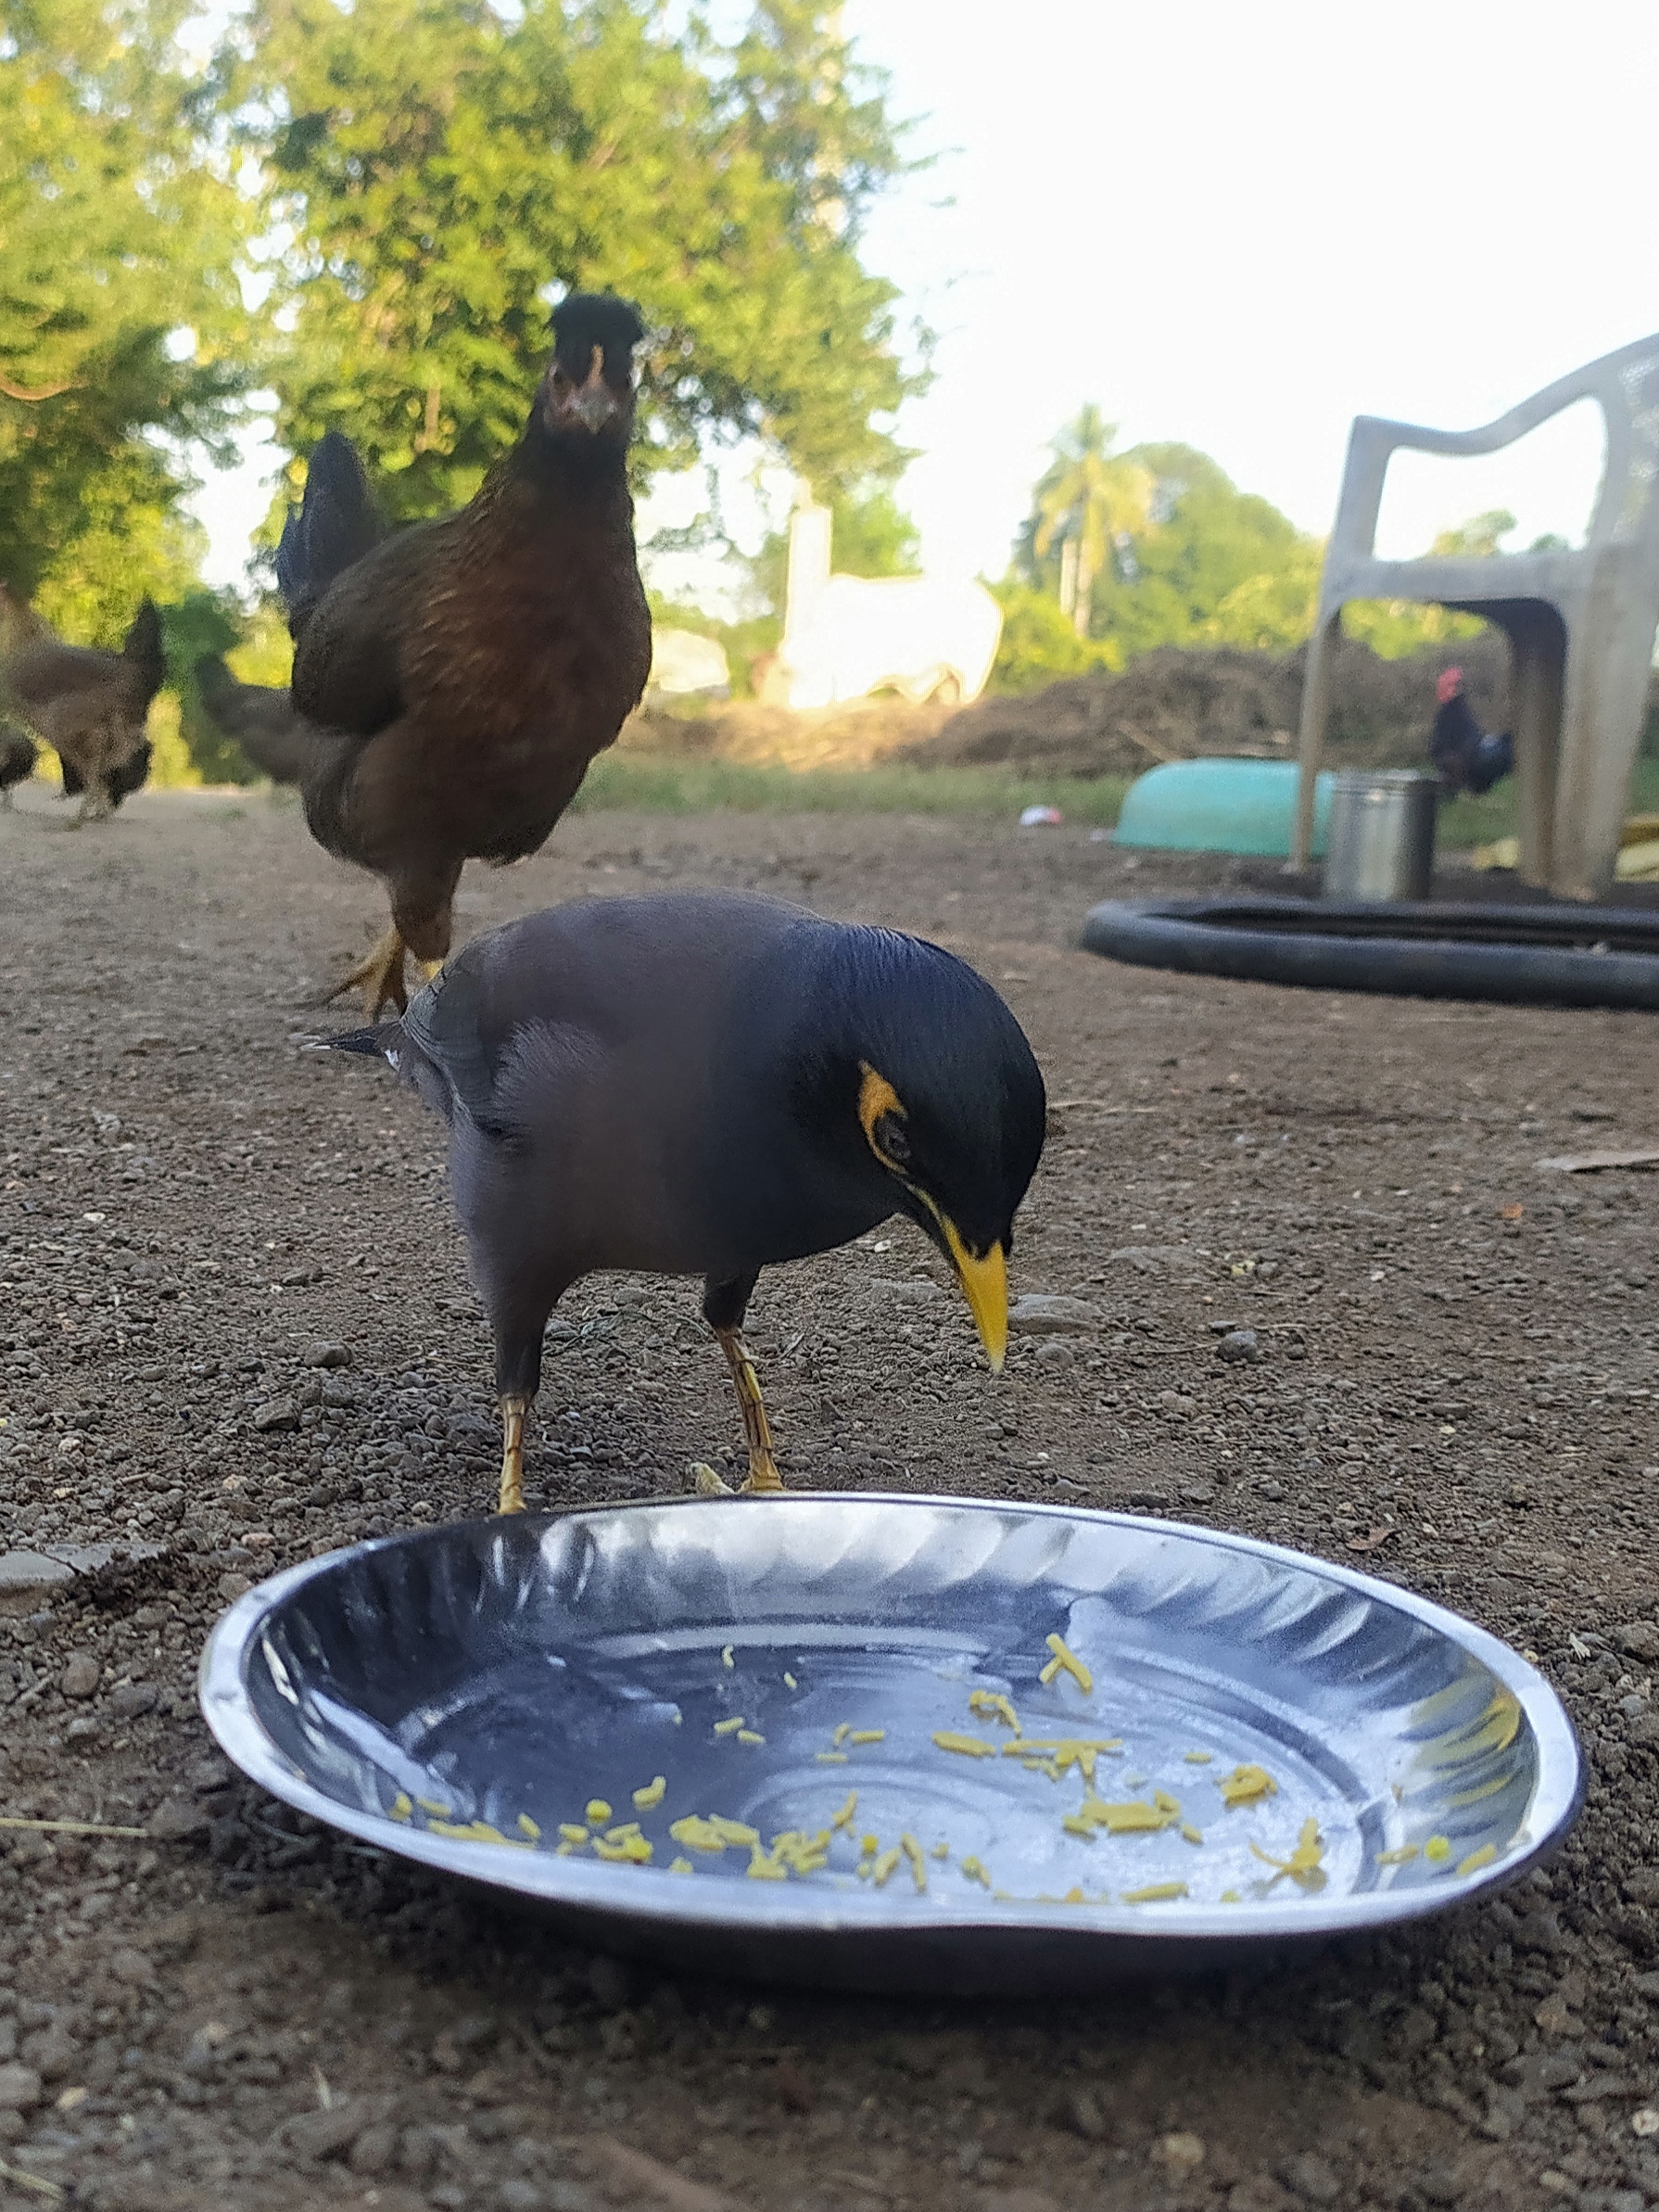 Feeding to birds